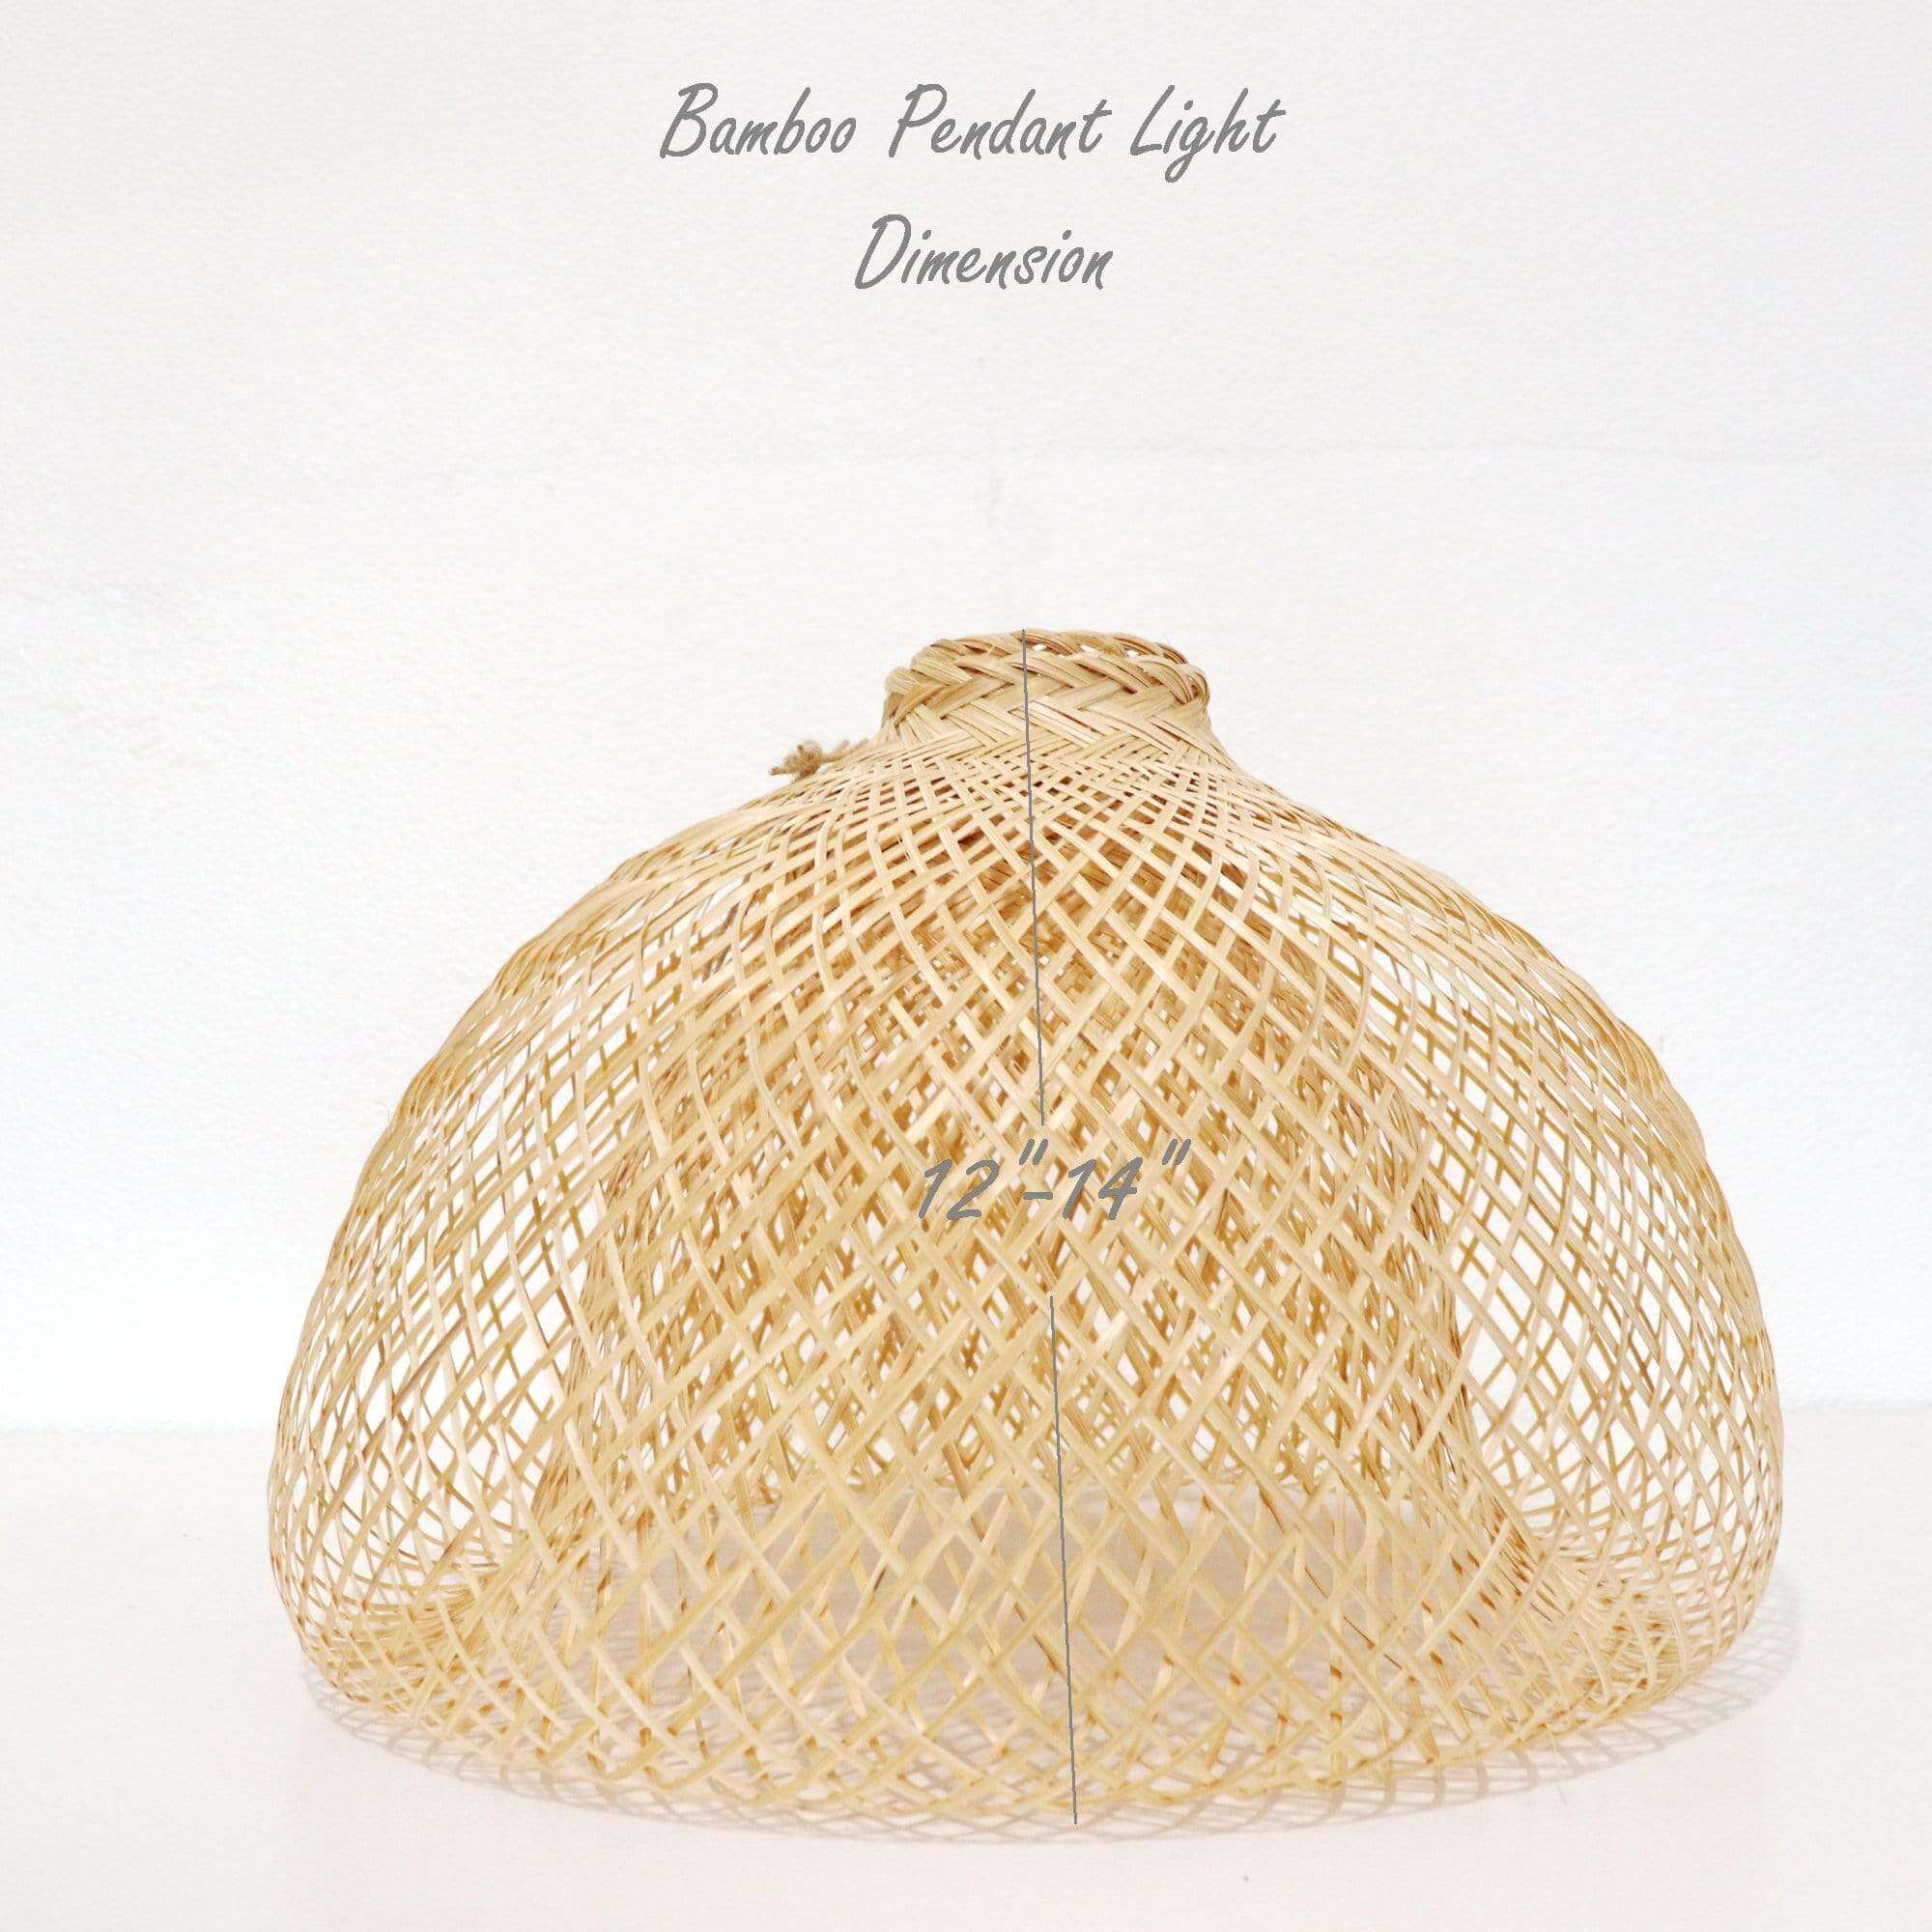 RUNGSAN - Bamboo Pendant Light Shade